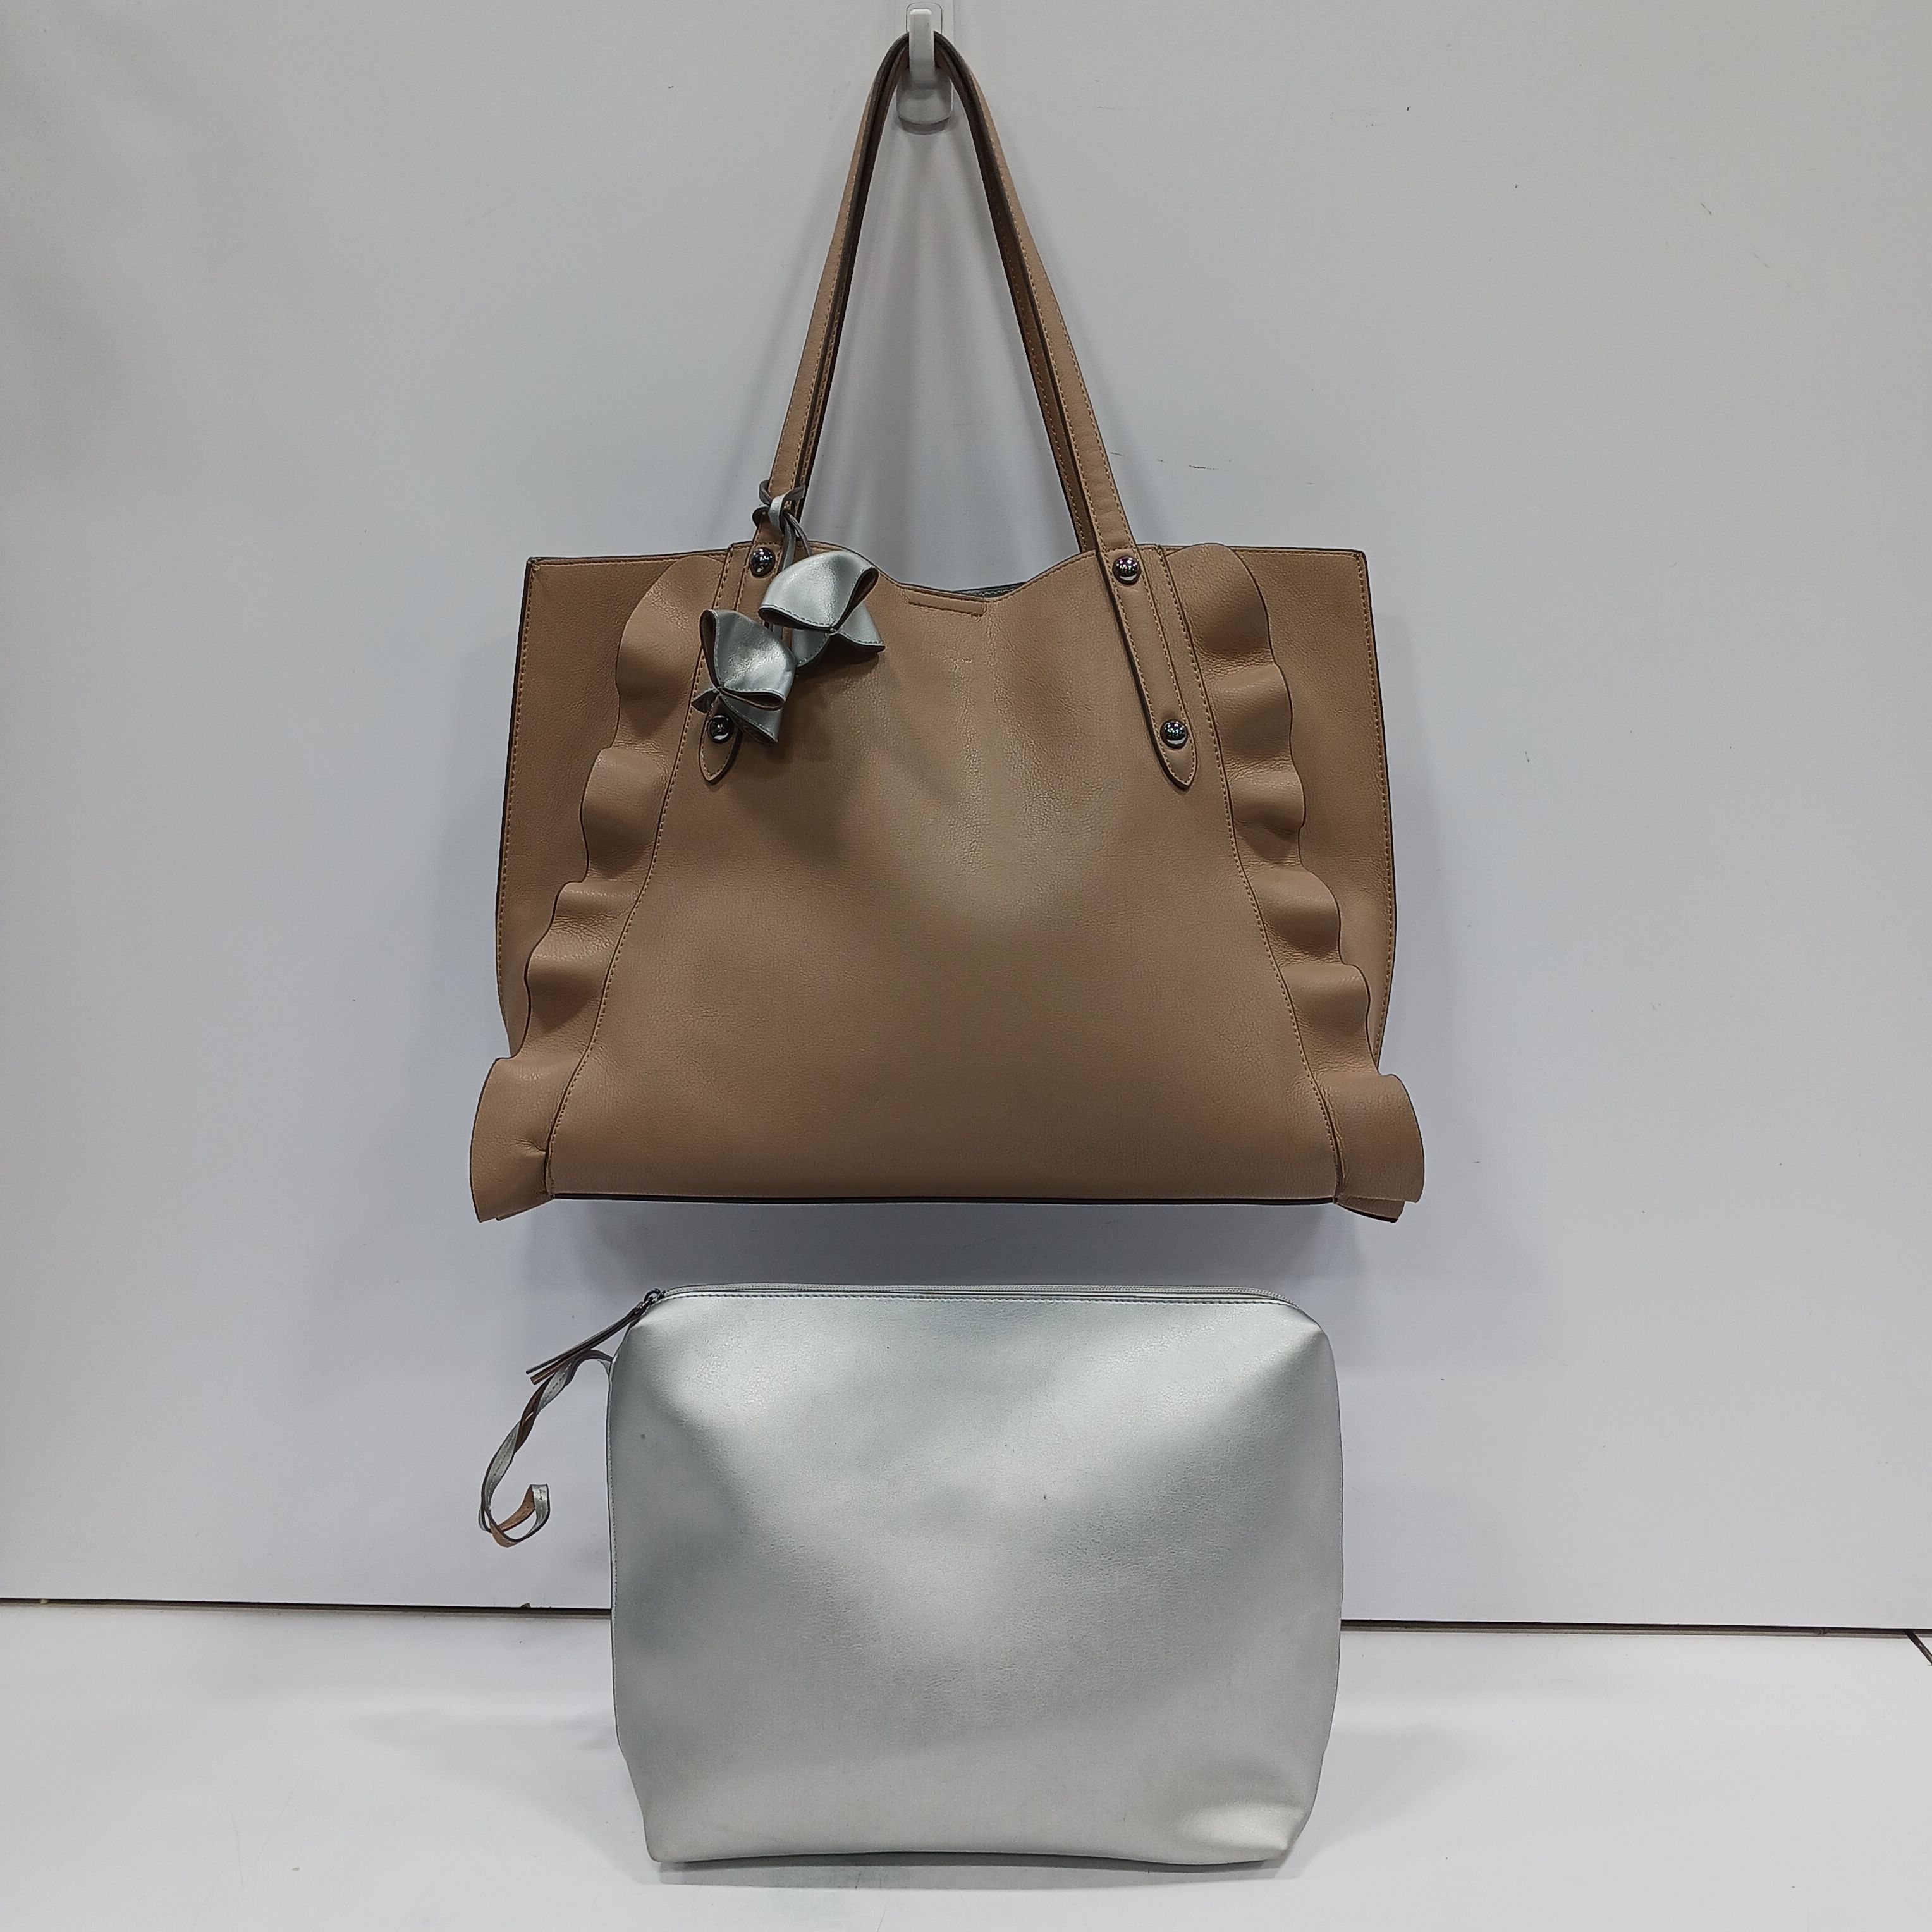 Rubino | Women's crossbody bag in leather color natural – Il Bisonte